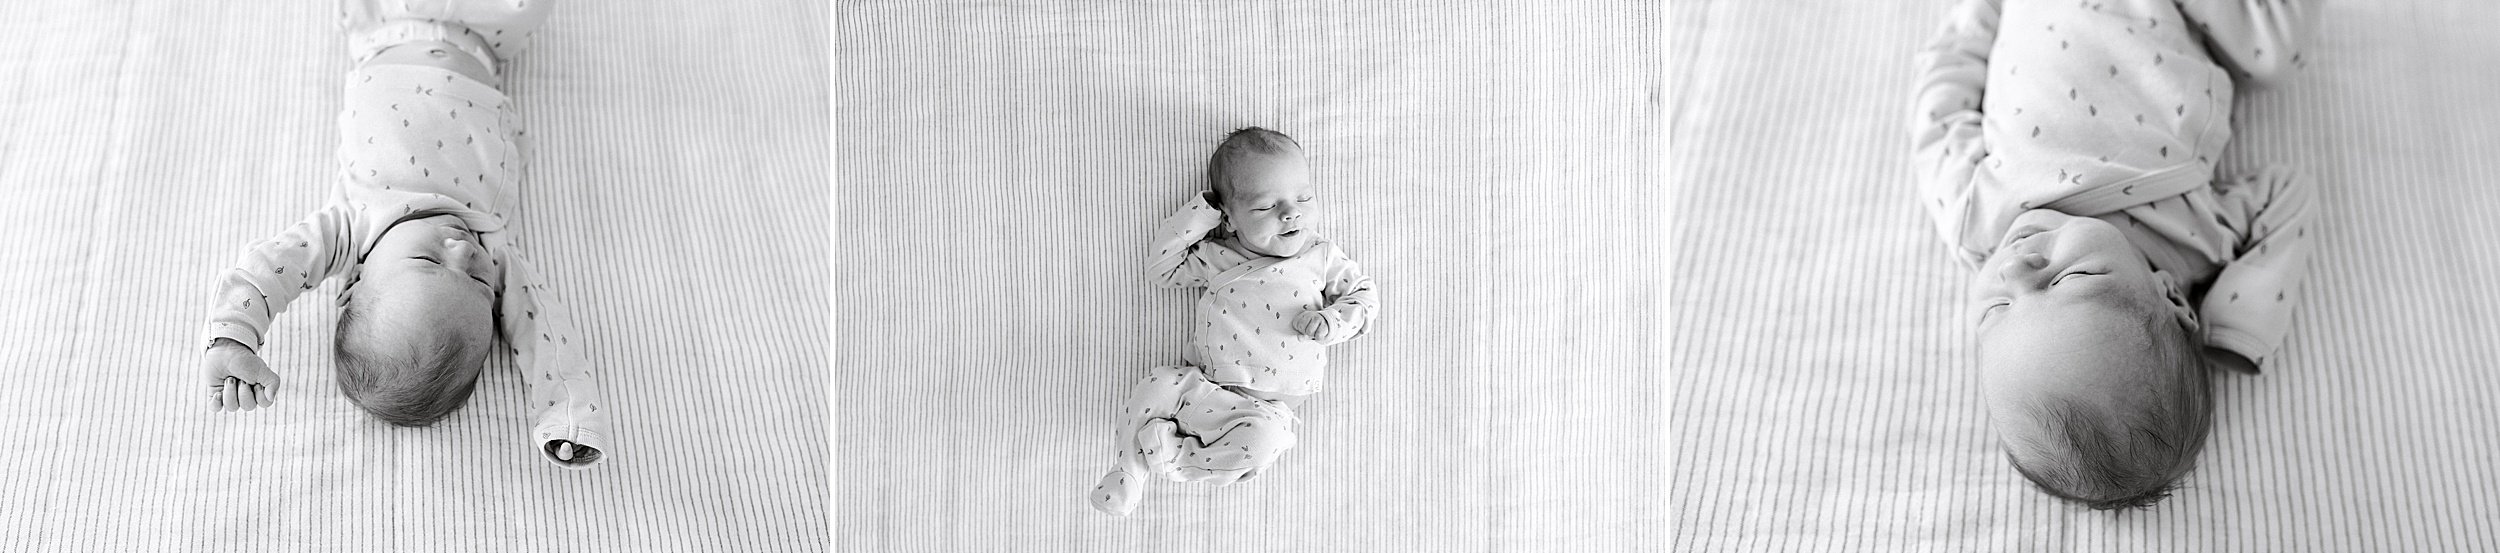 newborn-stock-photography